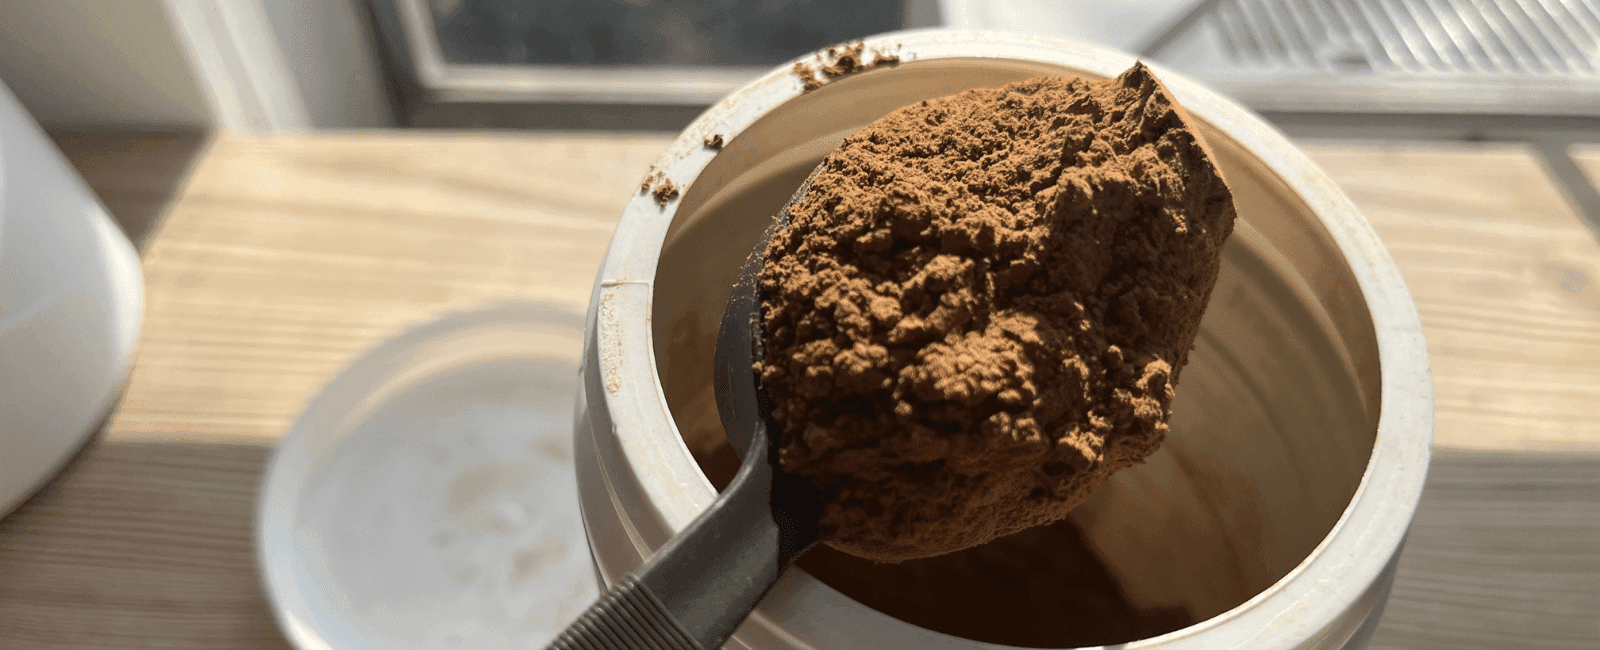 How to Make & Use Mushroom Powder at Home